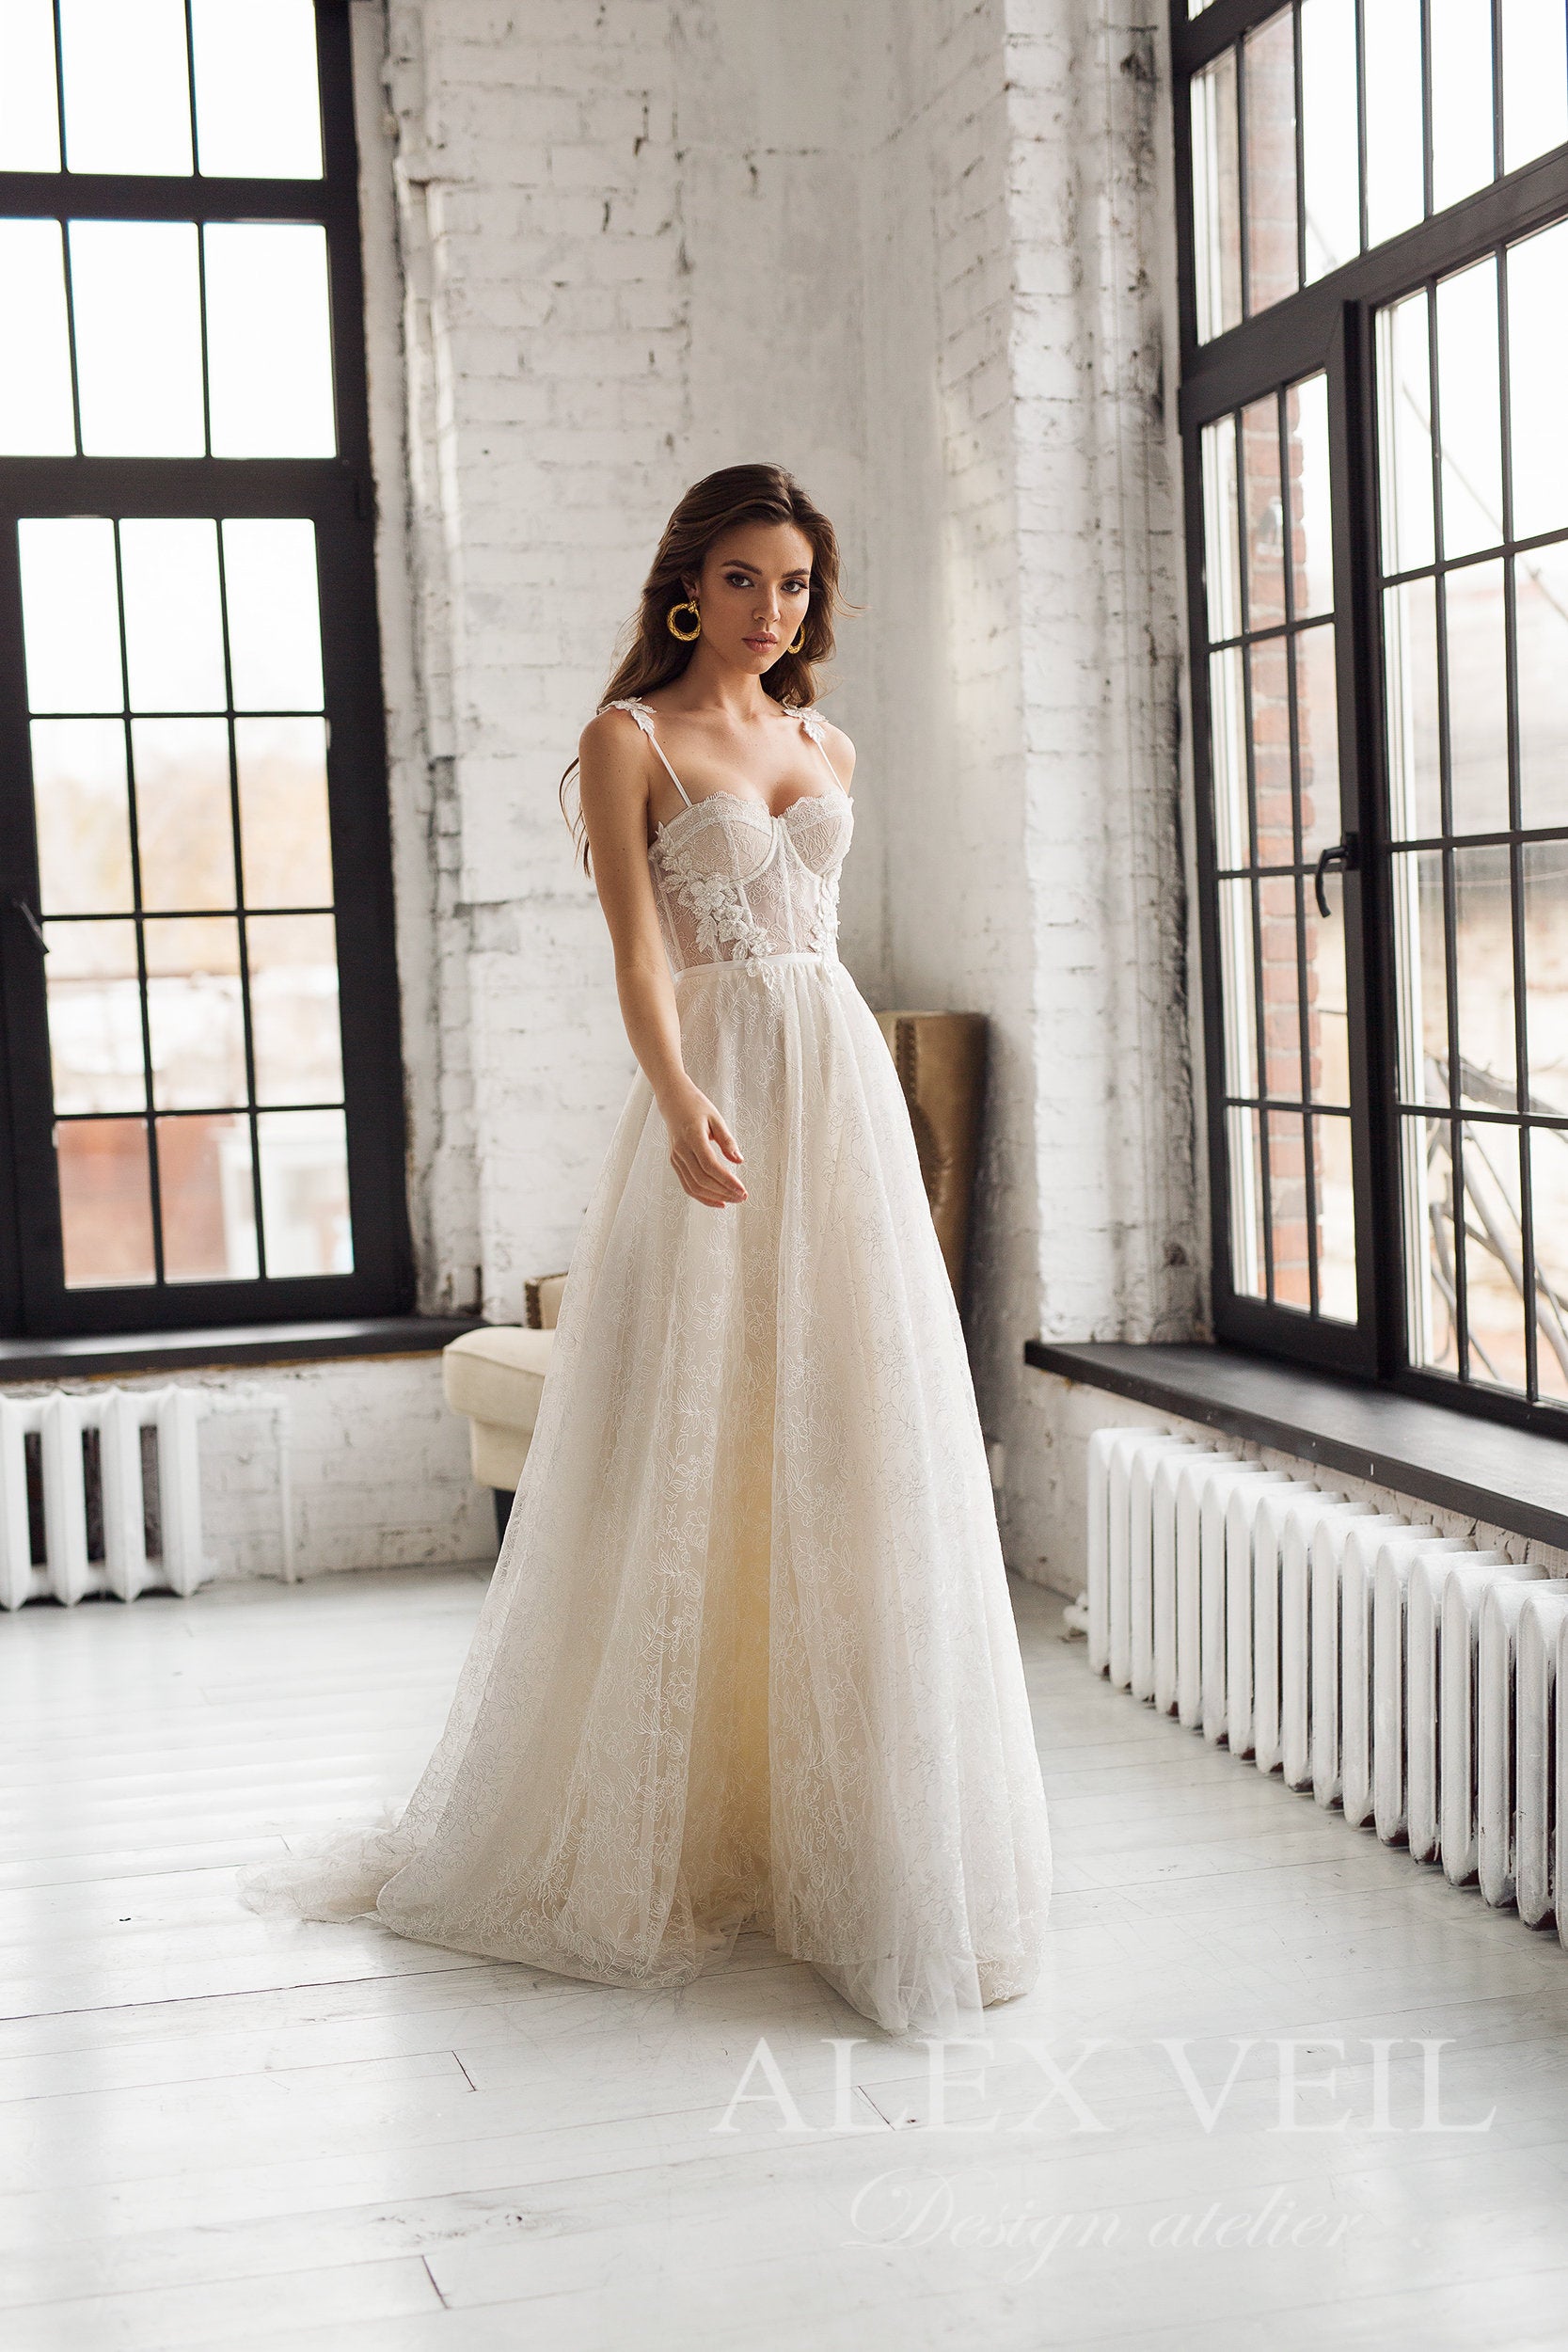 15 Wedding Dresses Under 1000 Dollars - Perfete